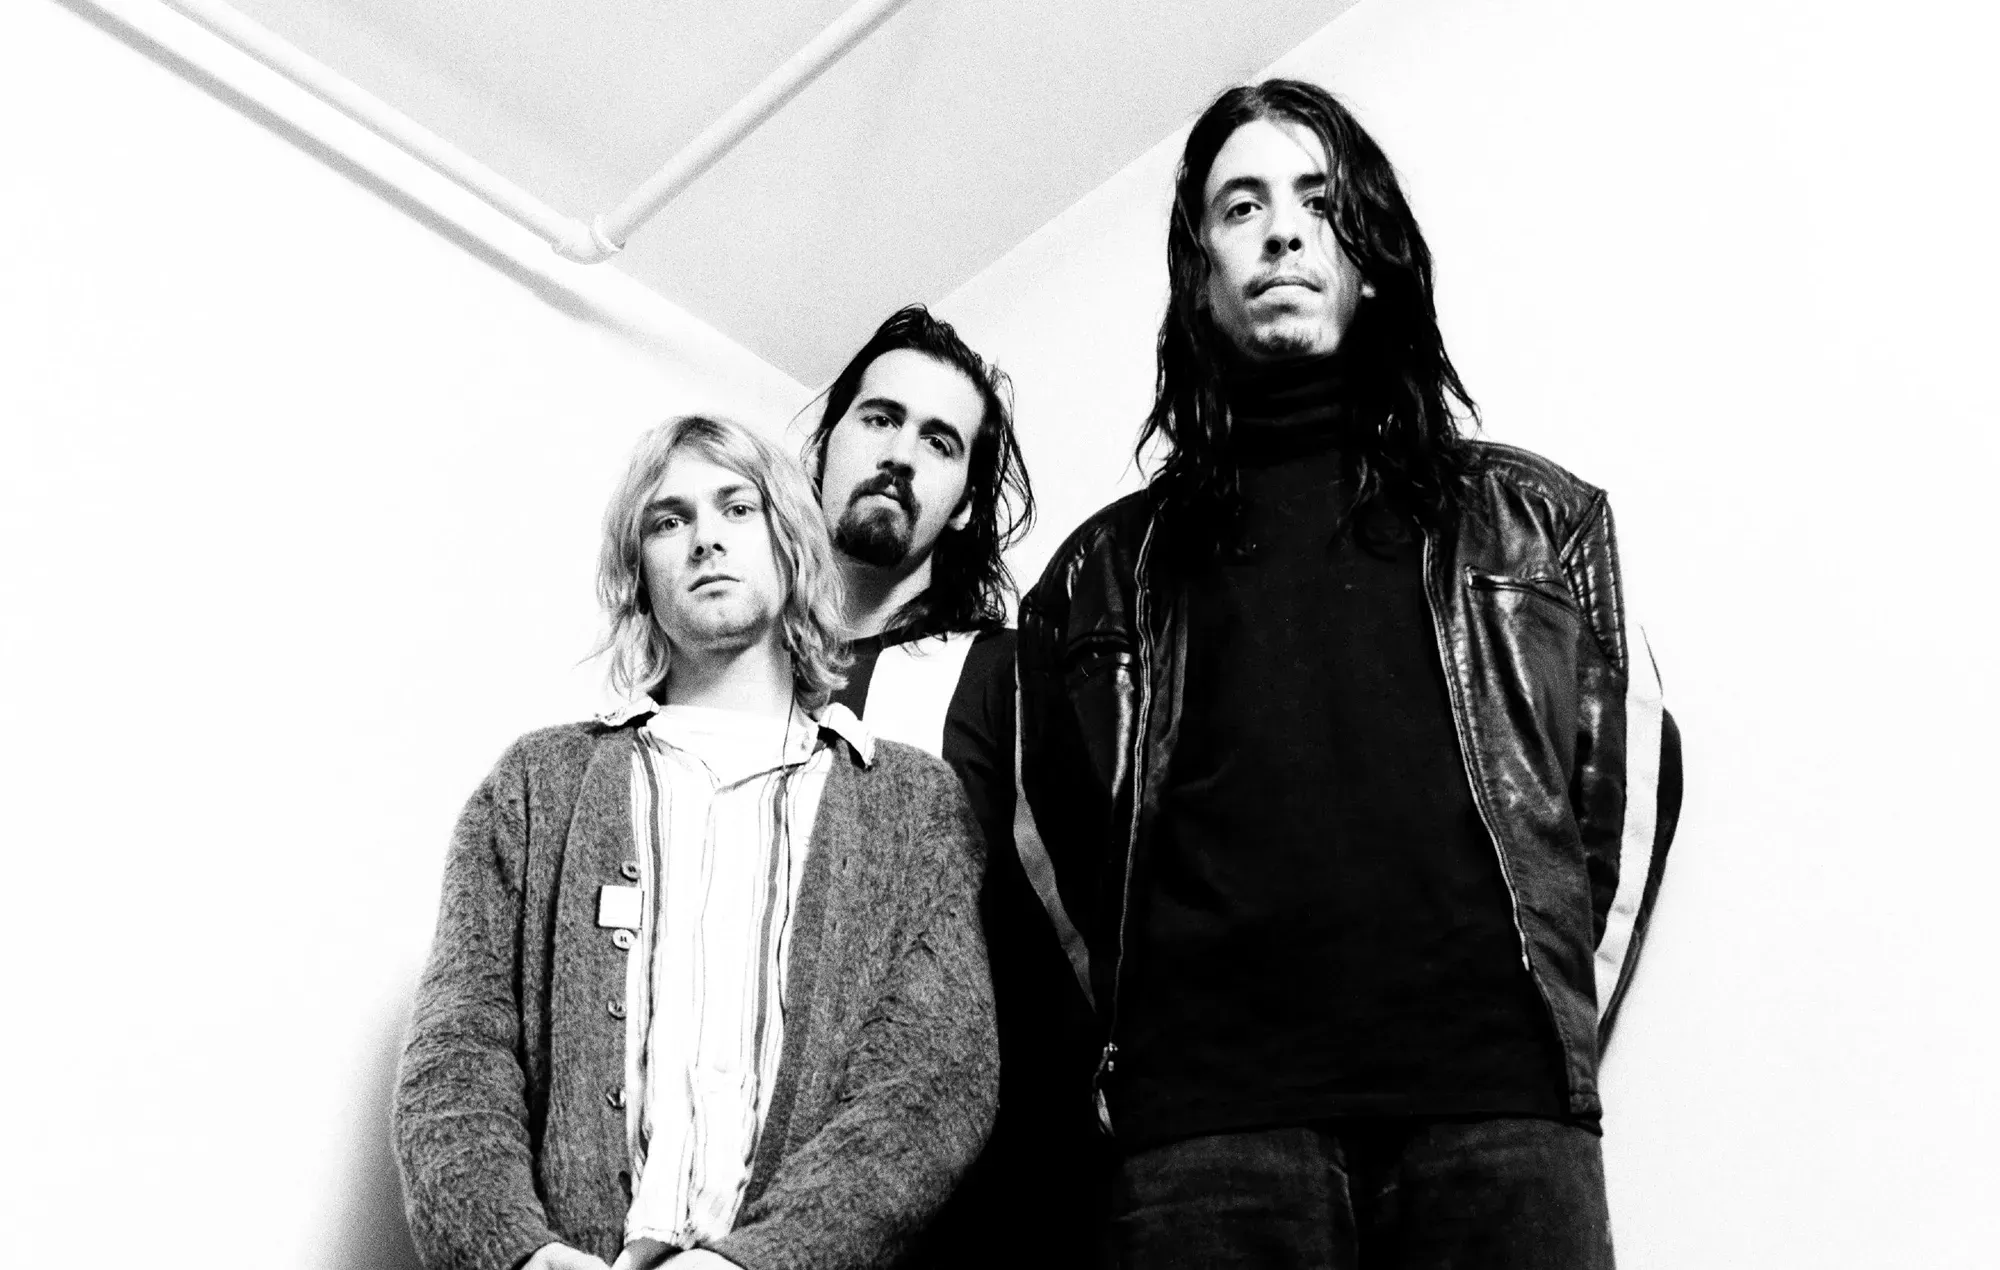 El juez desestima la demanda sobre el arte de la portada de Nirvana 'Nevermind'